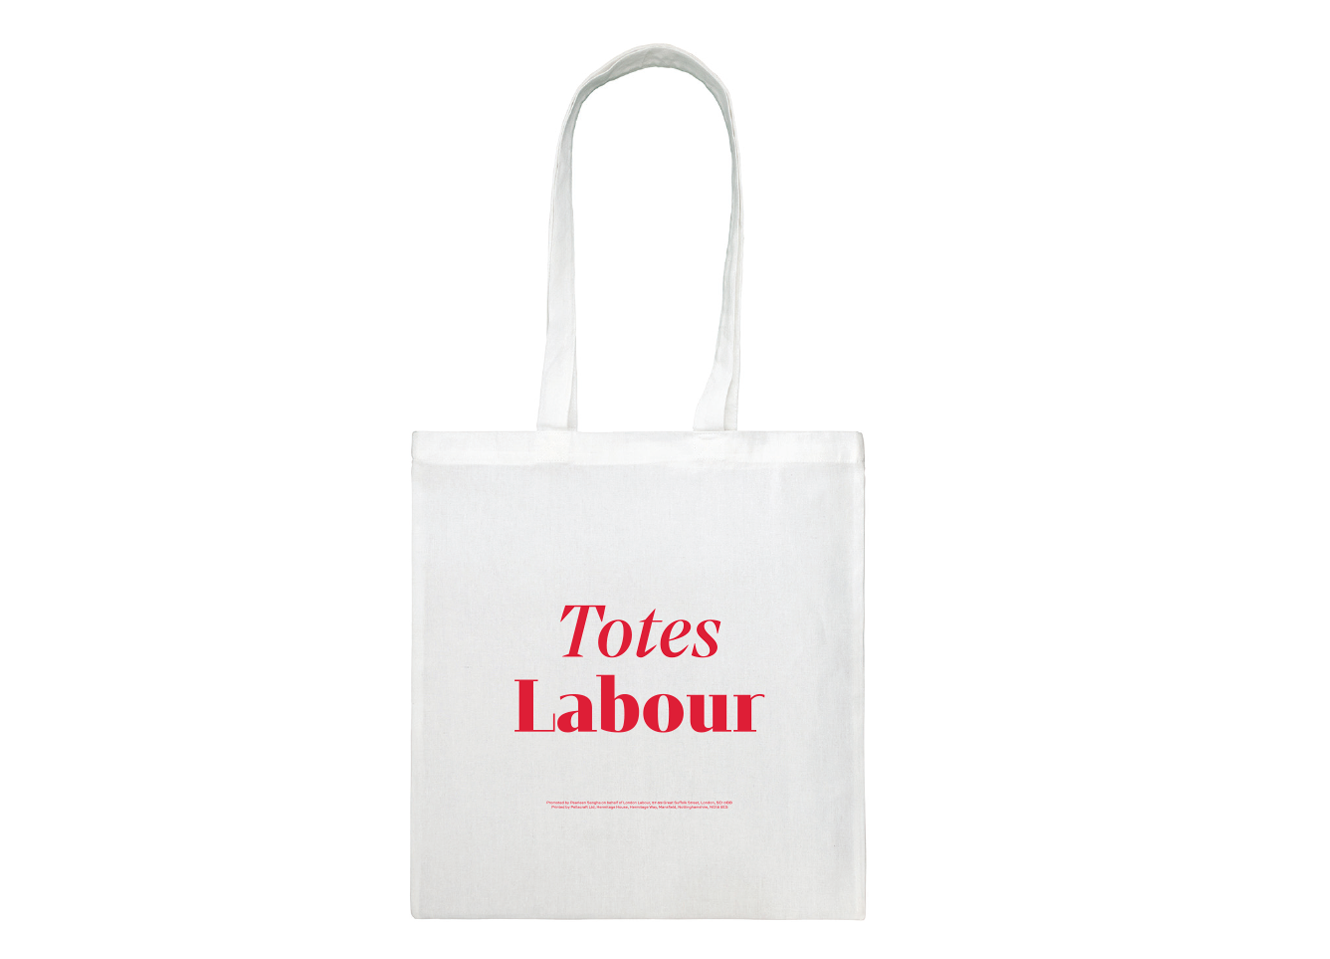 Totes Labour bag